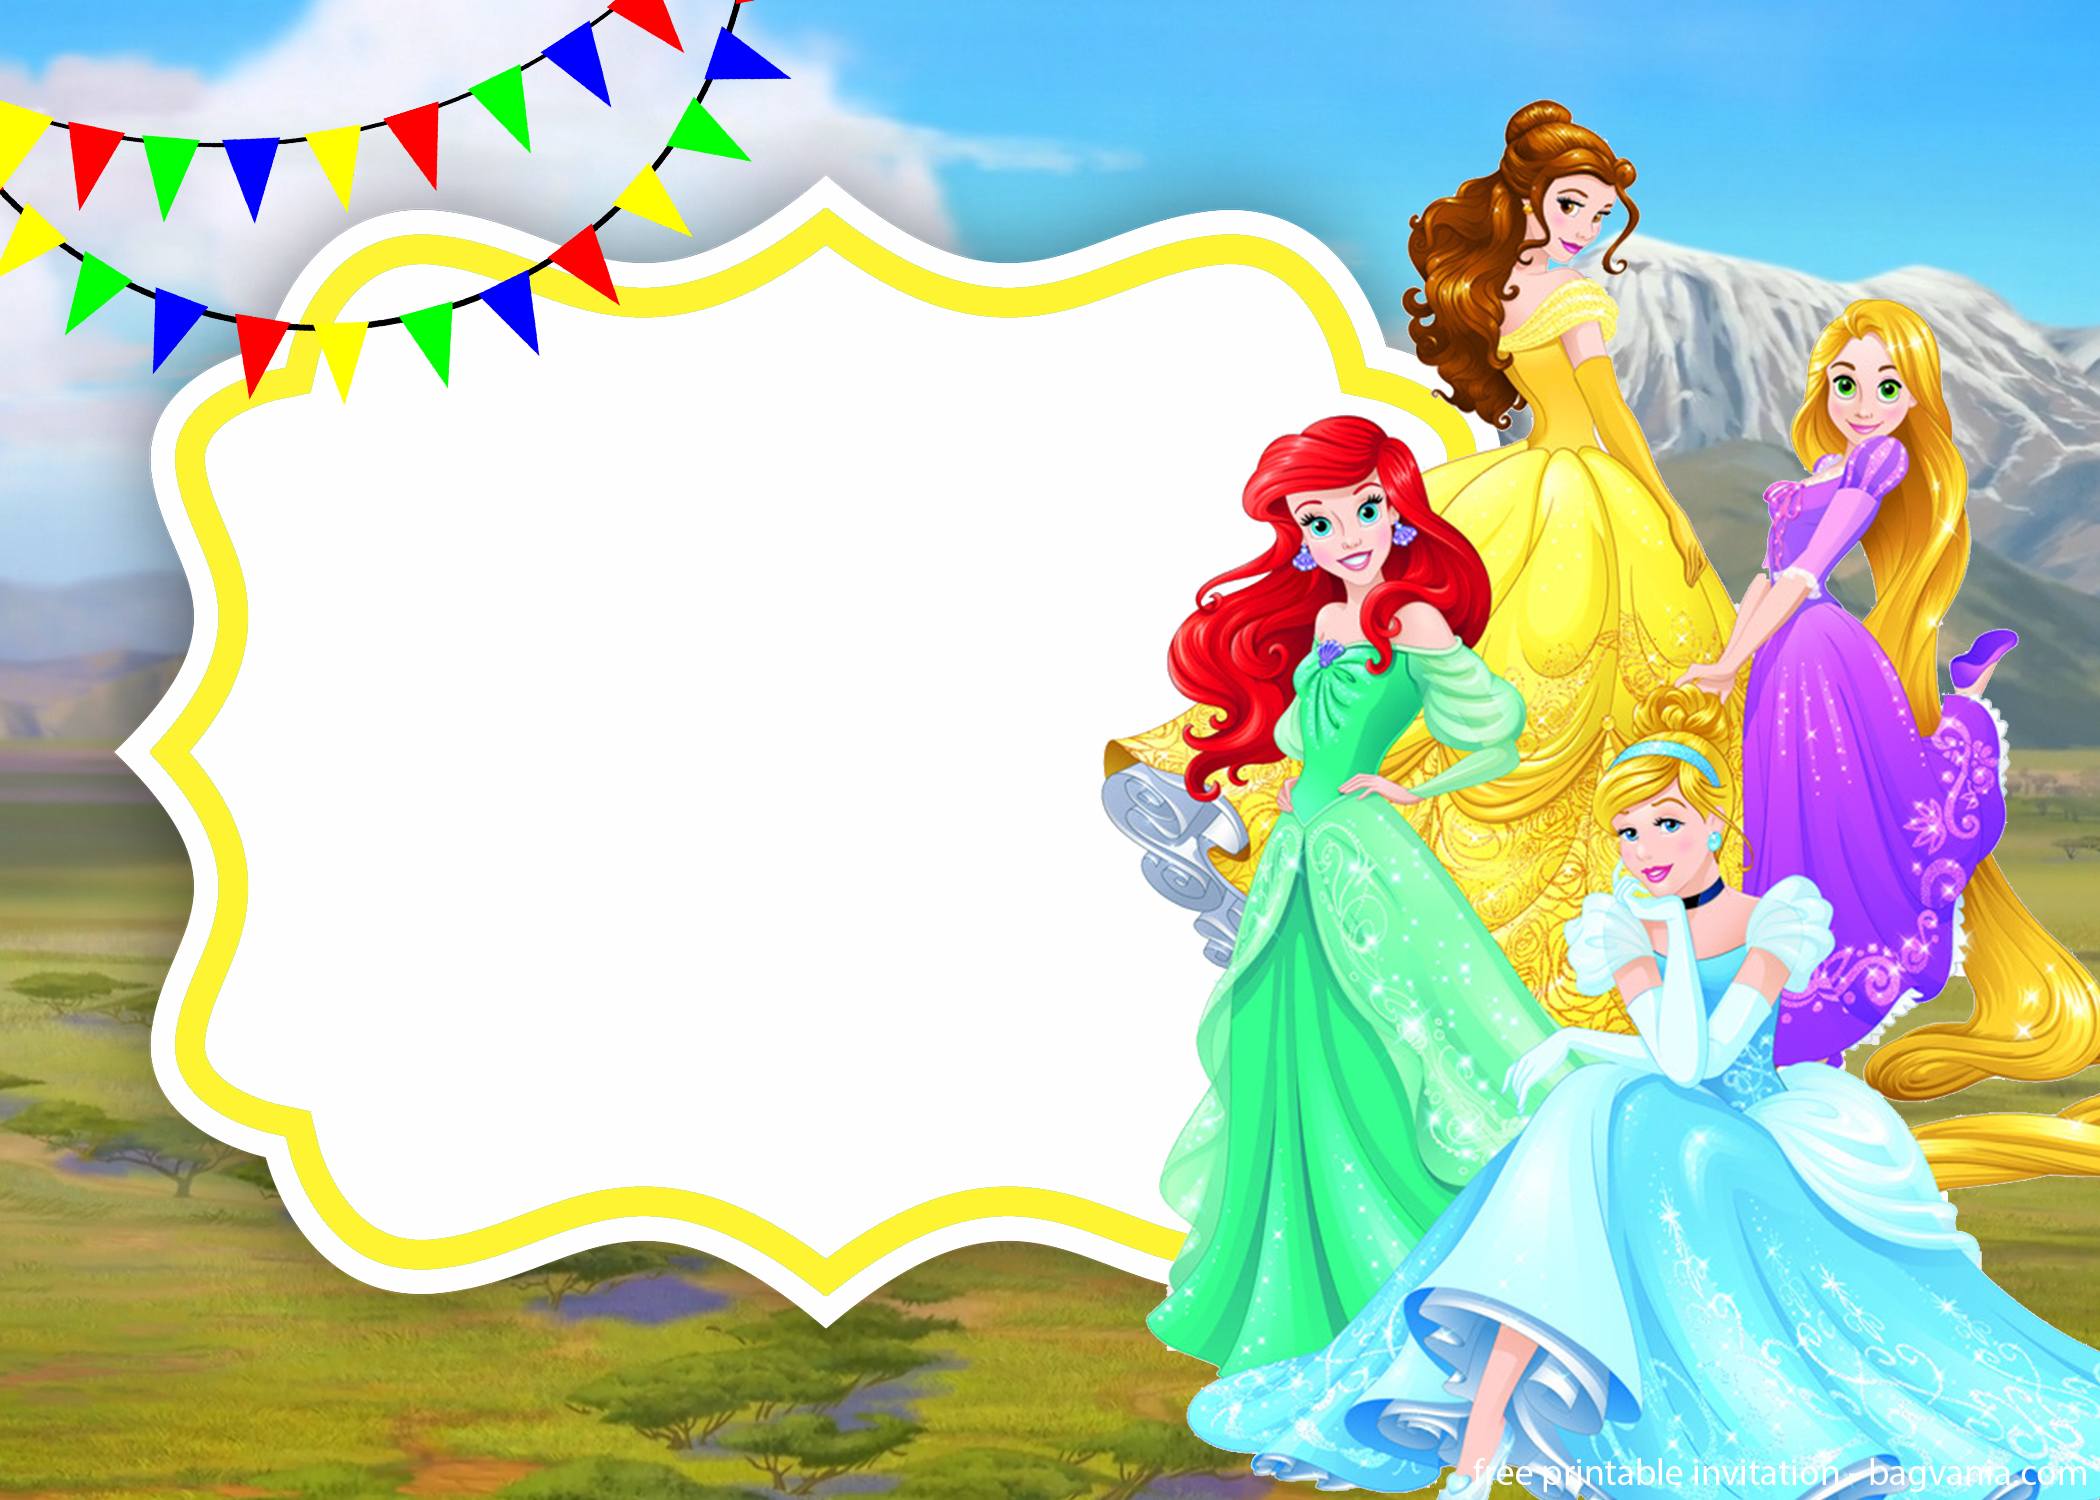 Golden Disney Princesses Invitation Template | FREE Printable Birthday